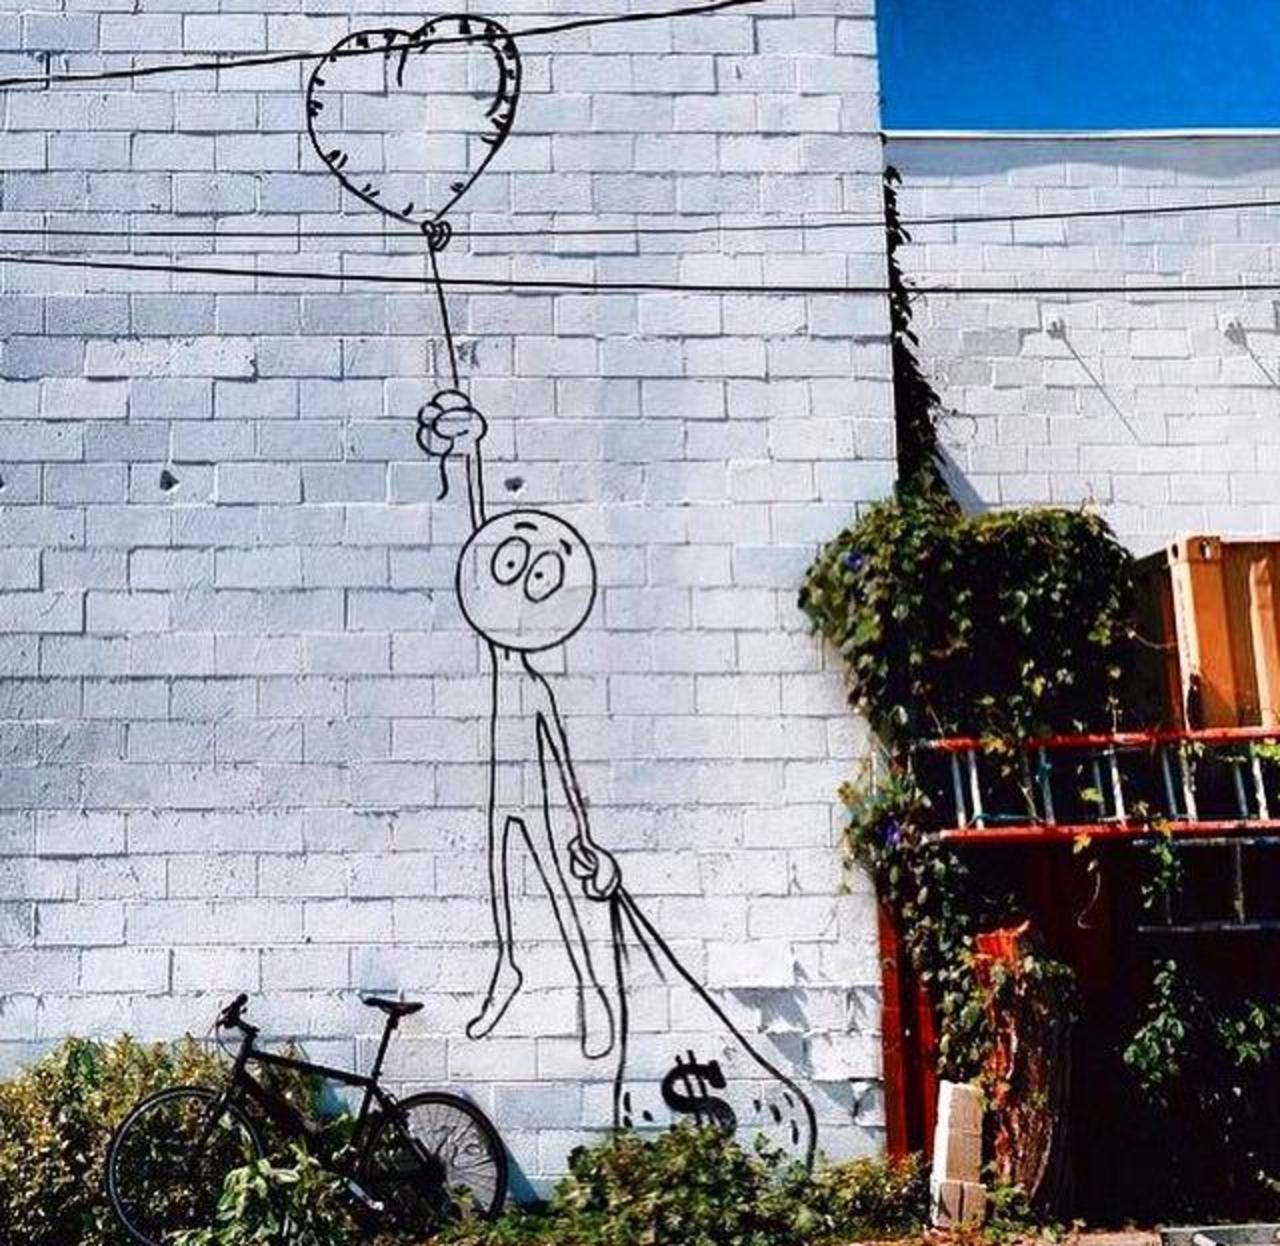 Cot Cot Cot Poule_Do : RT GoogleStreetArt: Love or money?
Street Art by Kaia Spire in LA 

#art #arte #graffiti #s… http://t.co/iFmqA9FiOm